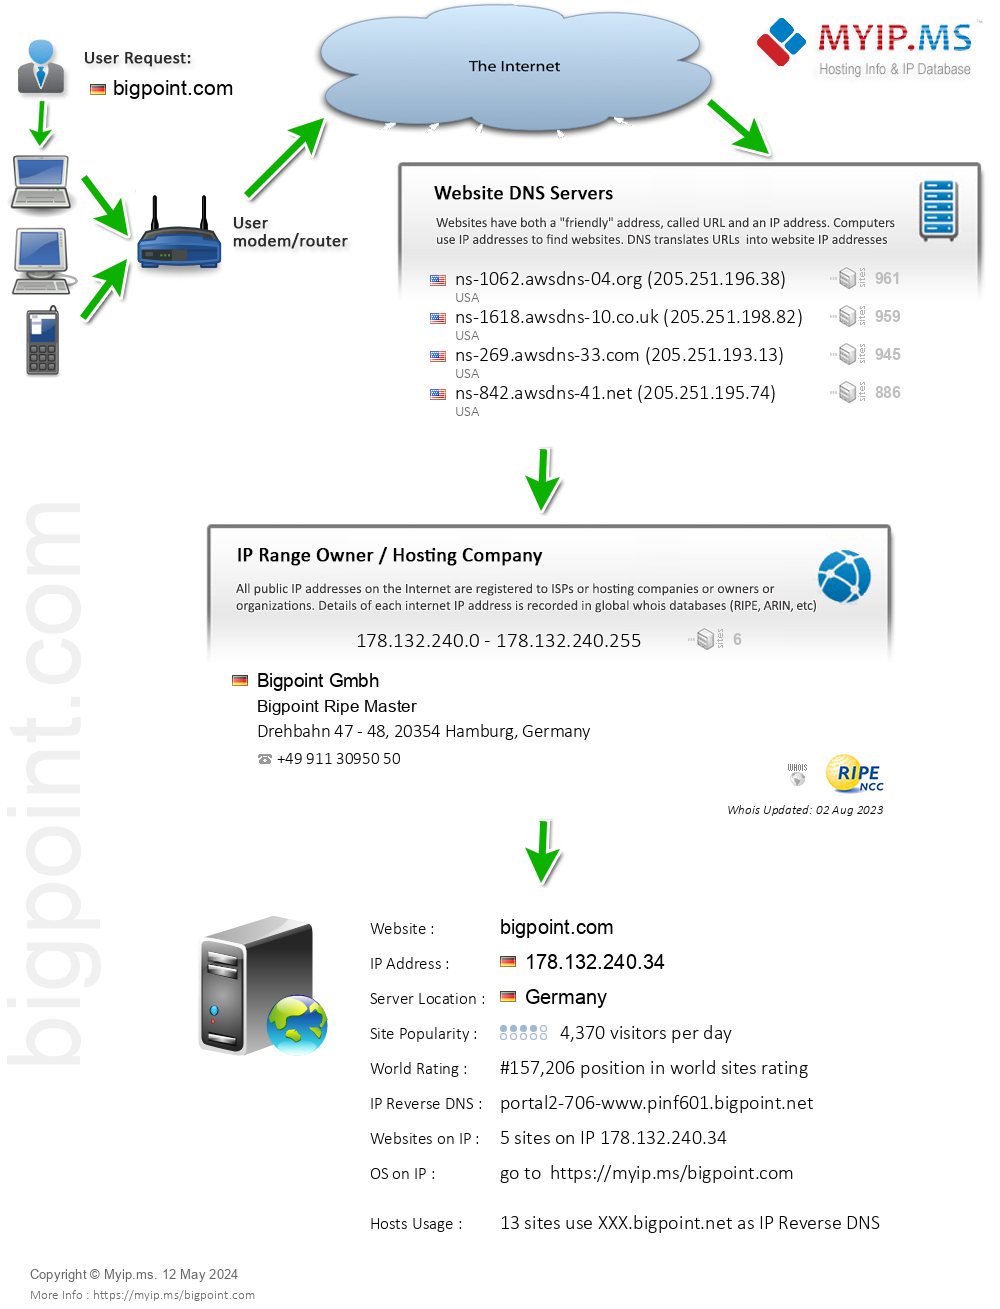 Bigpoint.com - Website Hosting Visual IP Diagram